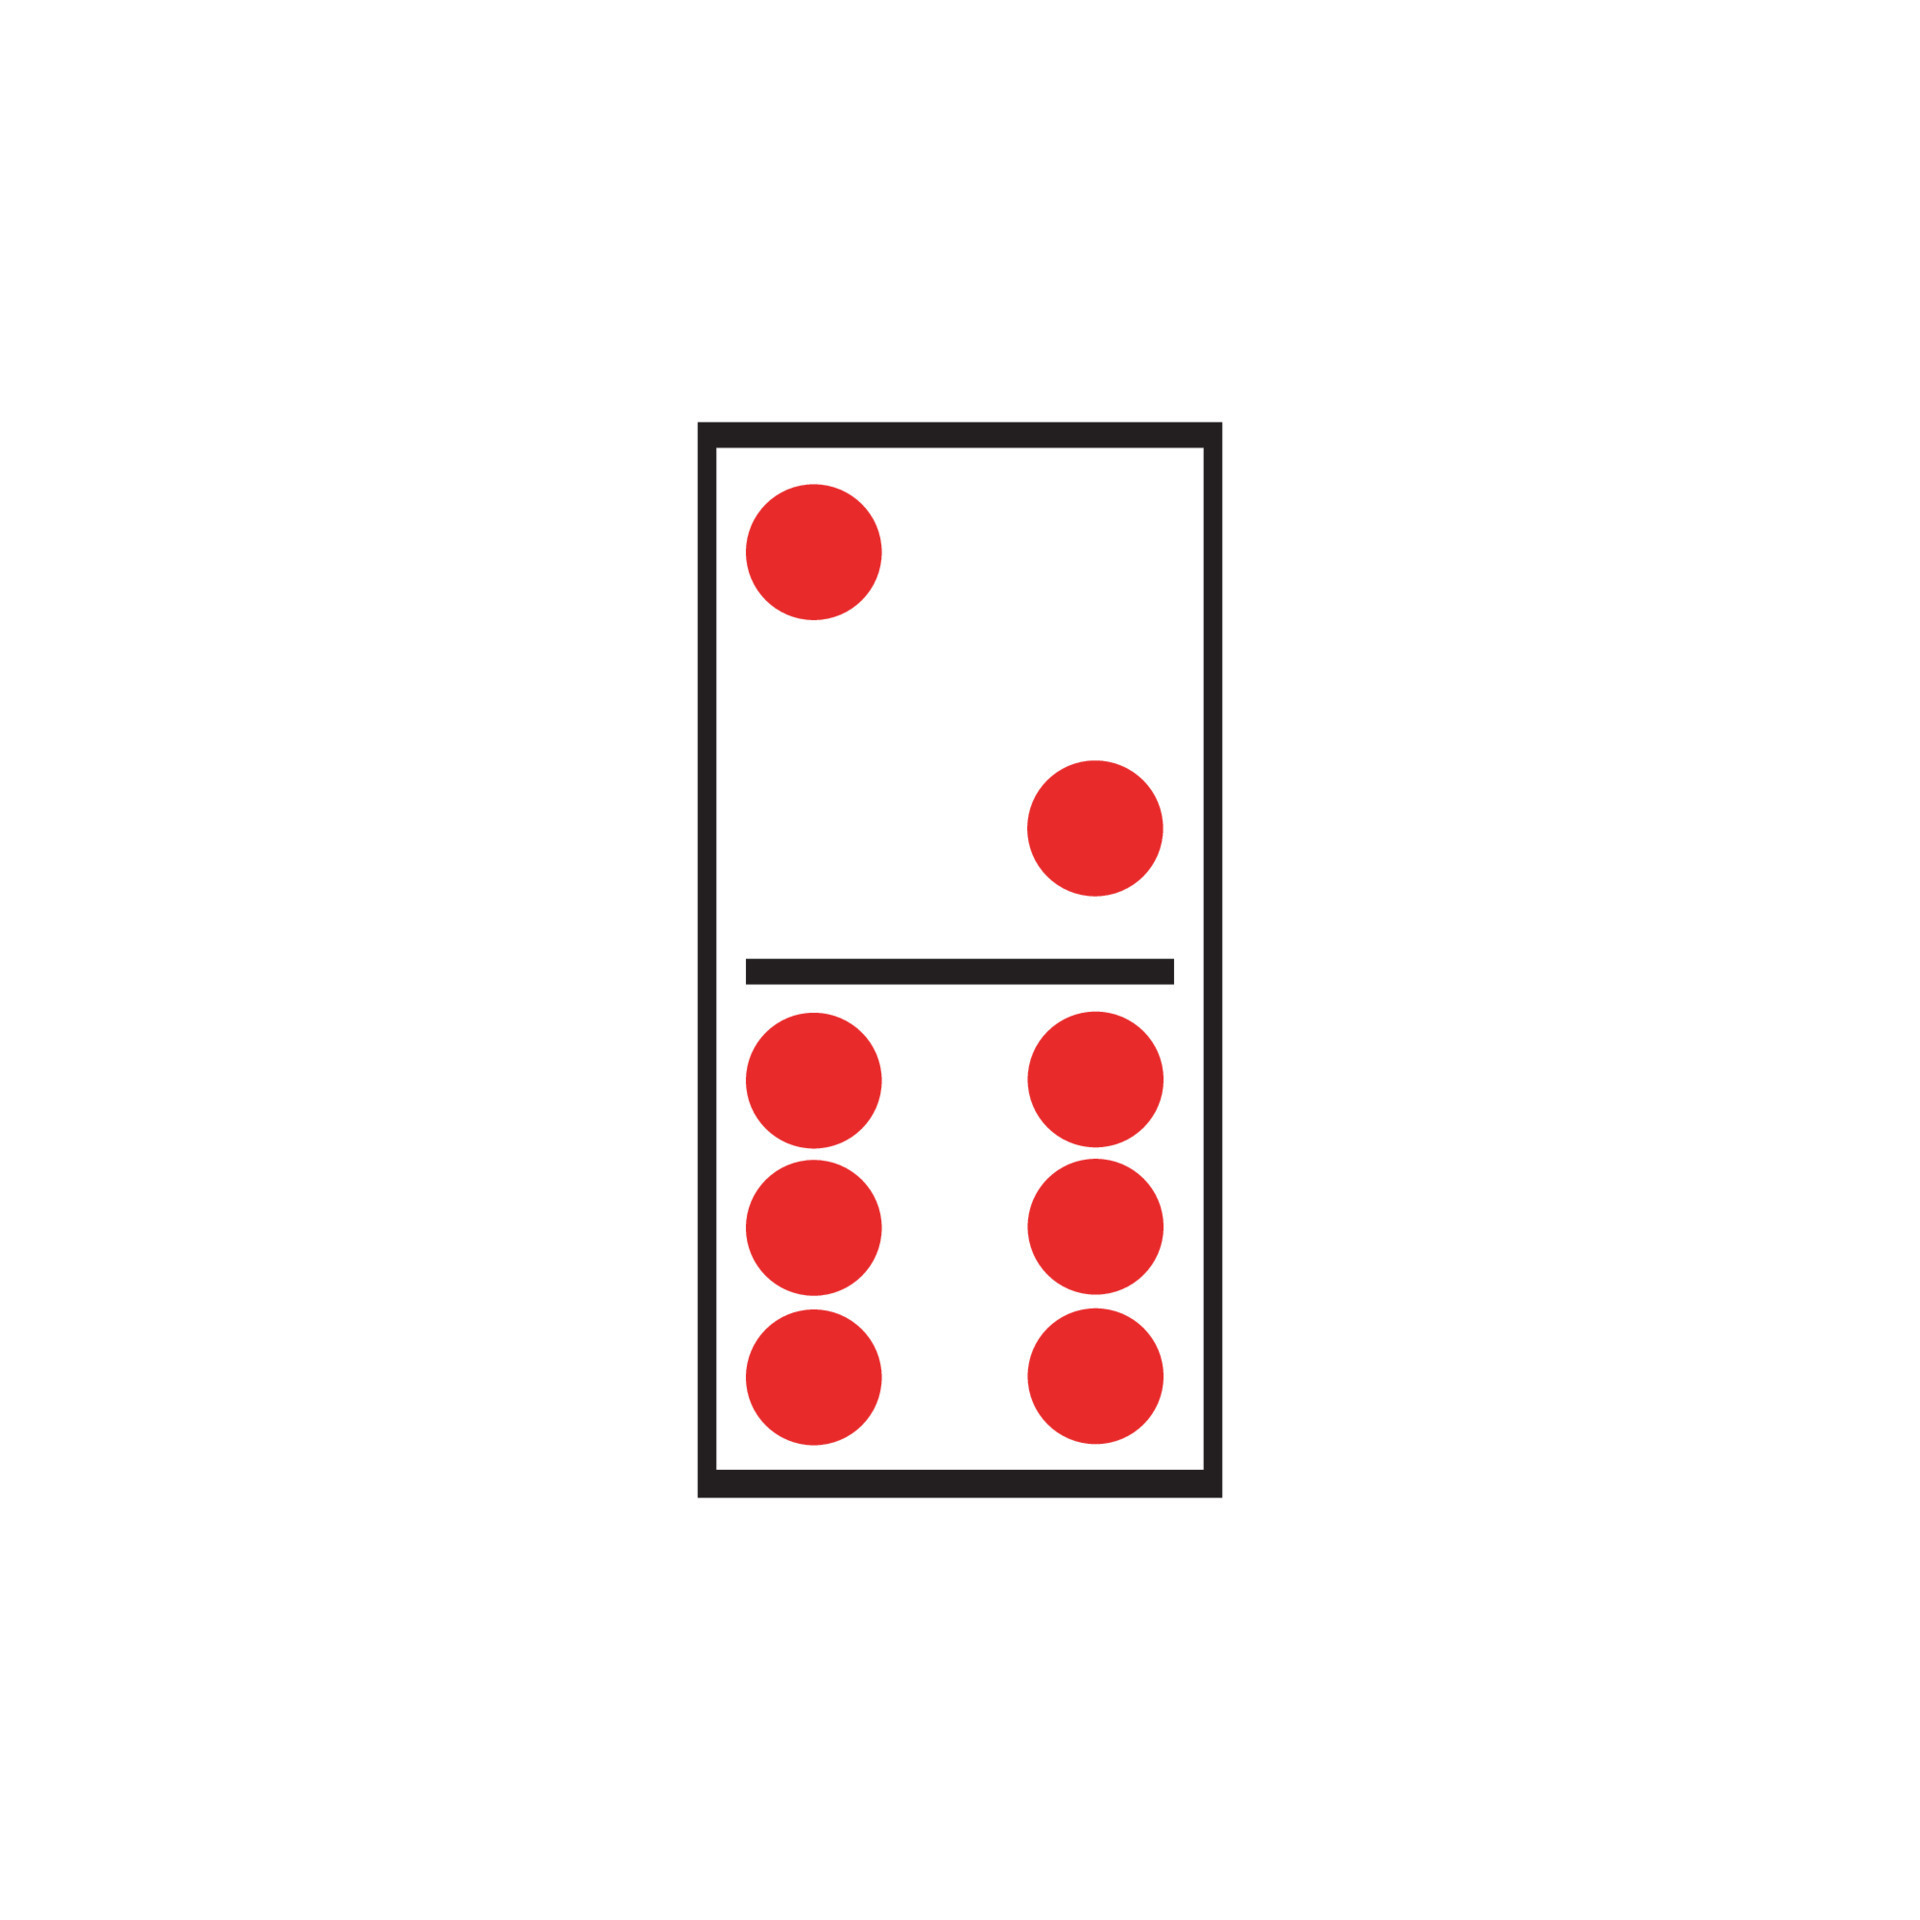 logotipo de jogos de dominó 13420468 Vetor no Vecteezy